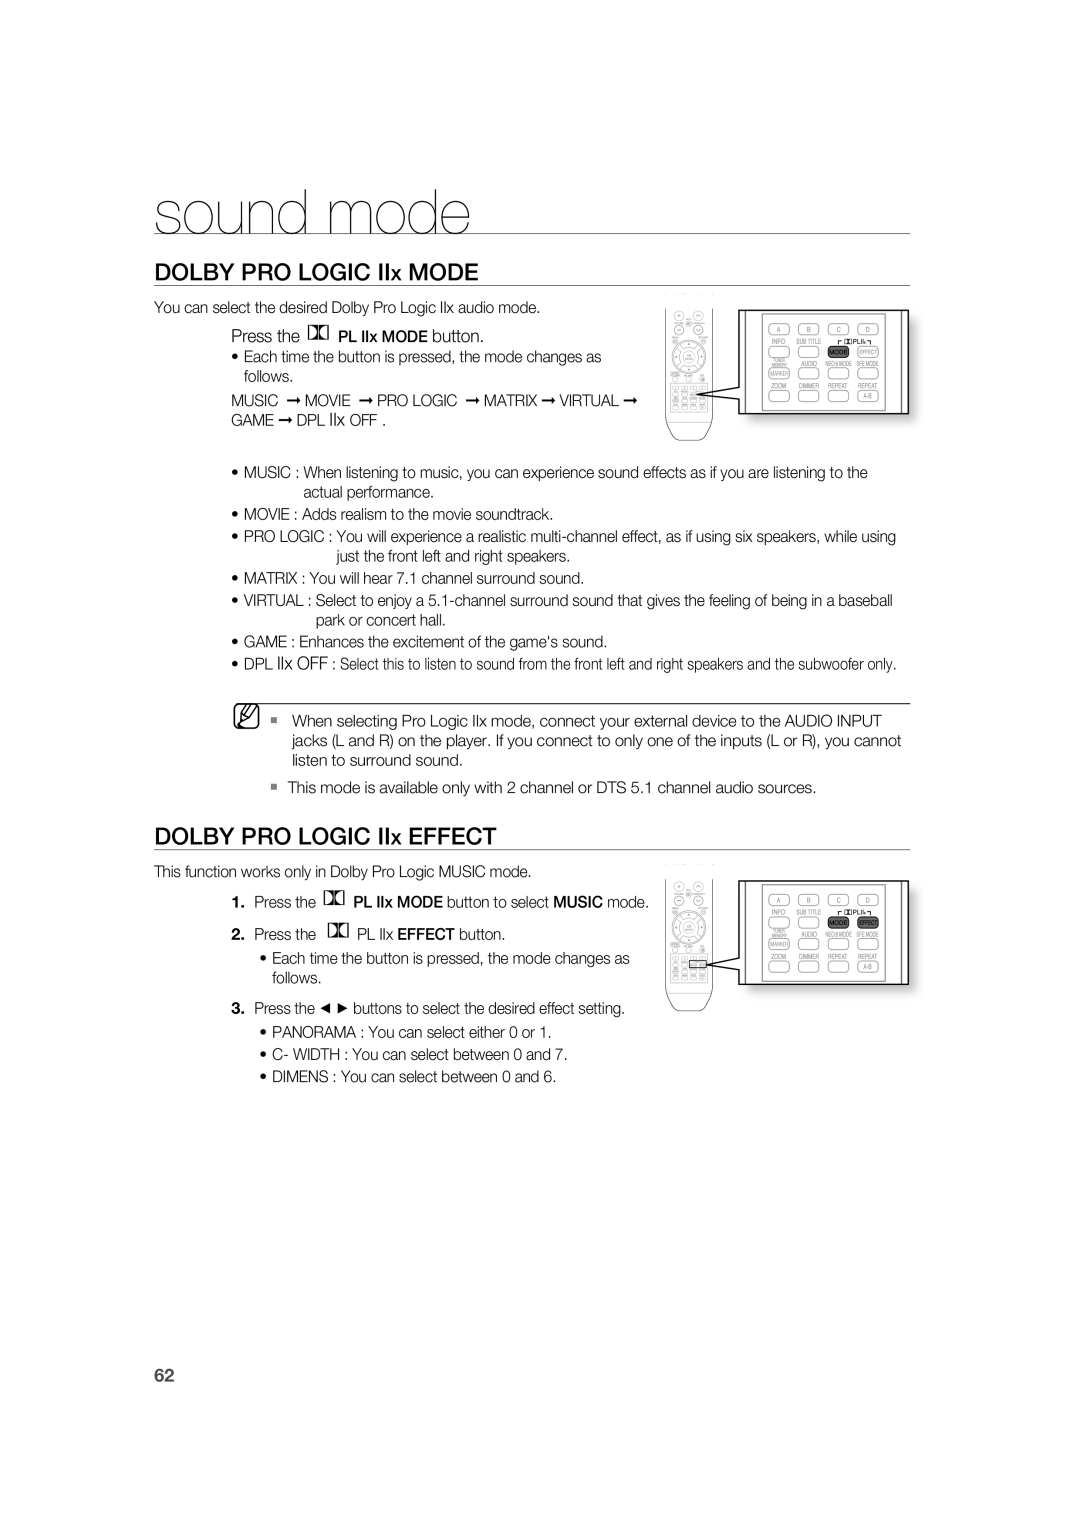 Samsung AH68-02019K manual DOLBY PRO LOGIC IIx MODE, DOLBY PRO LOGIC IIx EFFECT, sound mode, Press the PL IIx MODE button 